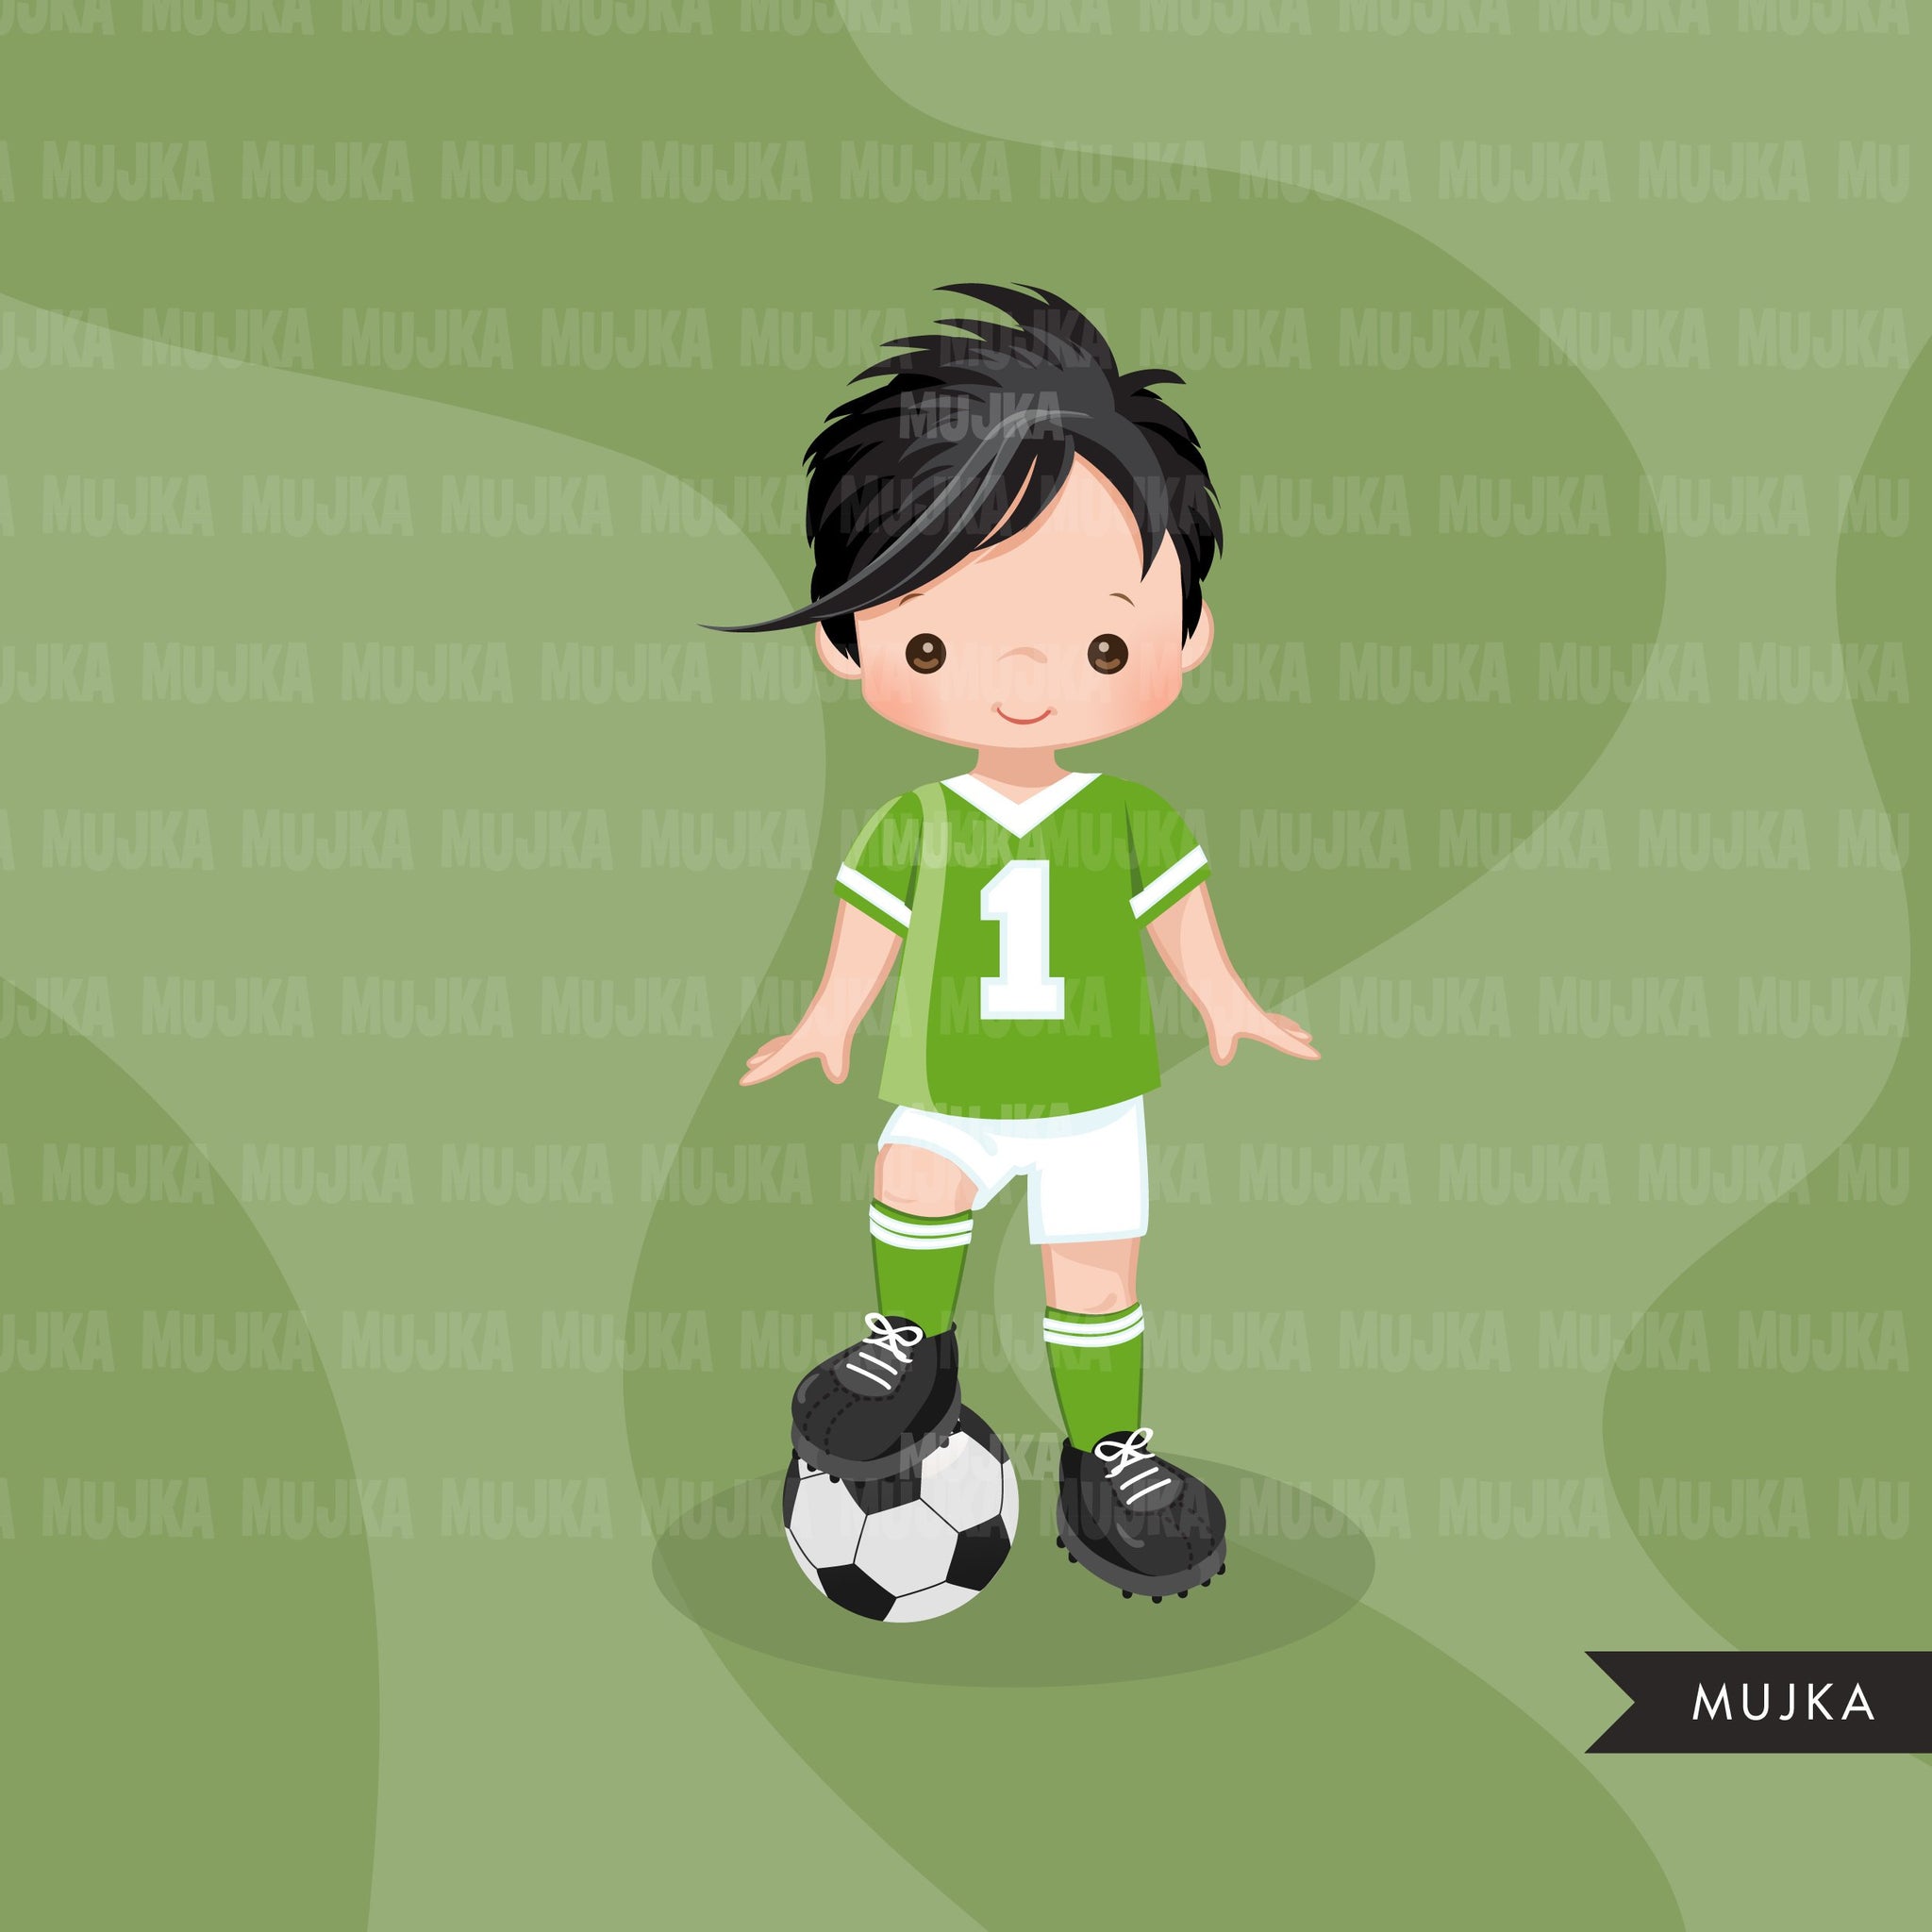 Soccer clipart, boy in green jersey